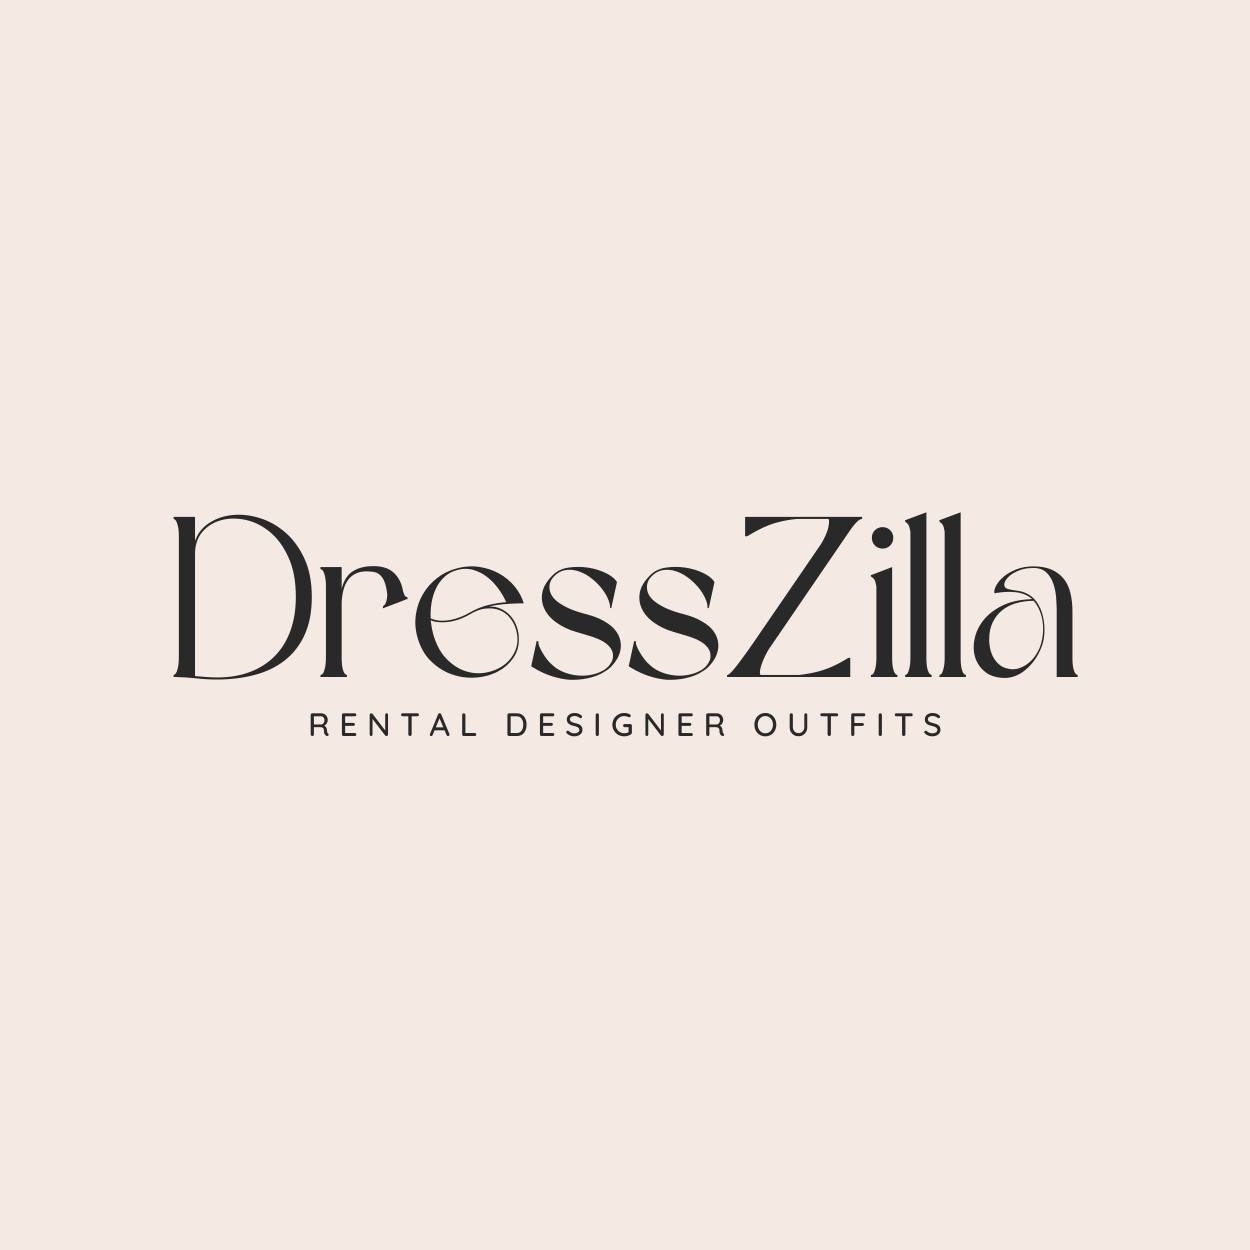 Dresszilla- Men’s rental outfit in Jaipur, Men’s dress on rent in Jaipur, Three peace suit on rent in Jaipur - Logo